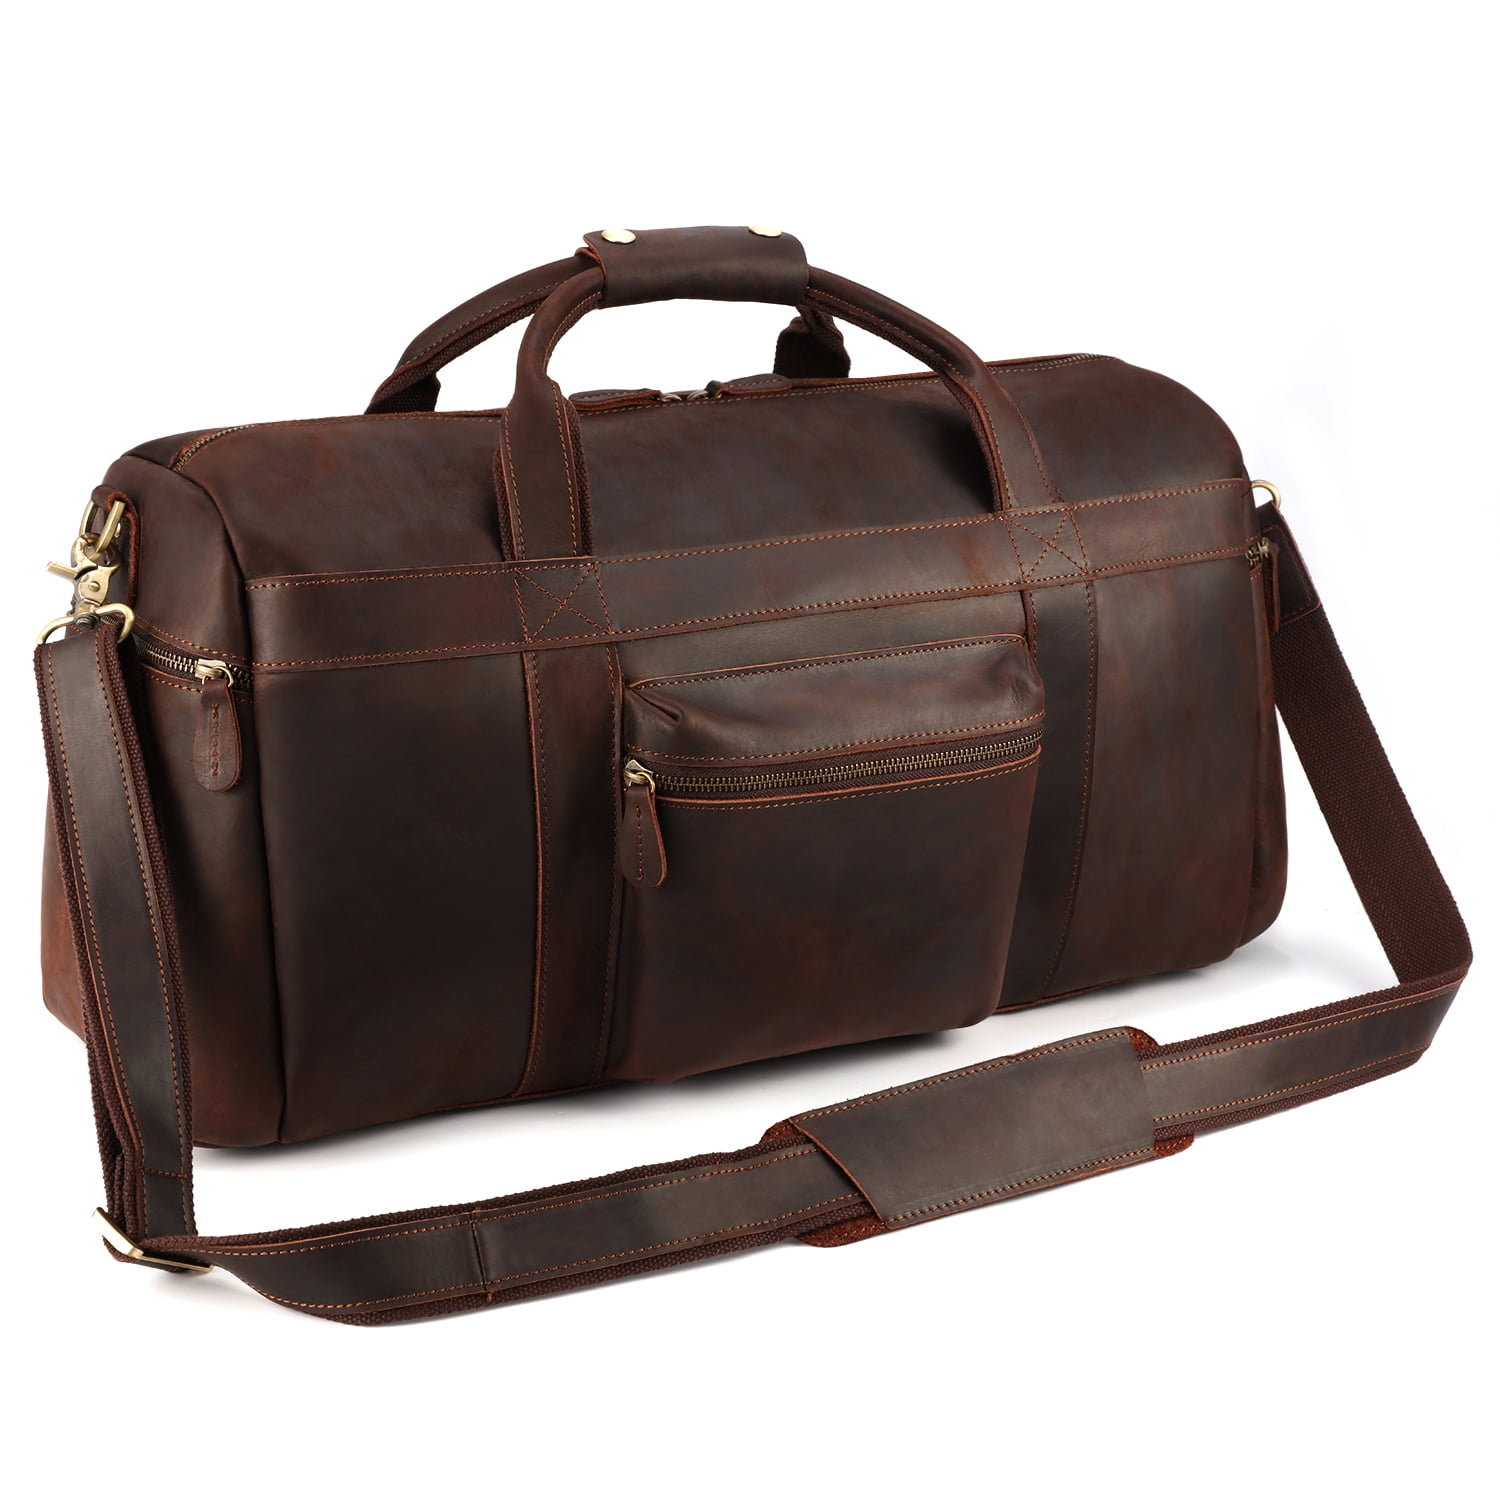 Kattee Retro Leather Duffel Bag Large Overnight Travel Bag - www.speedy25.com